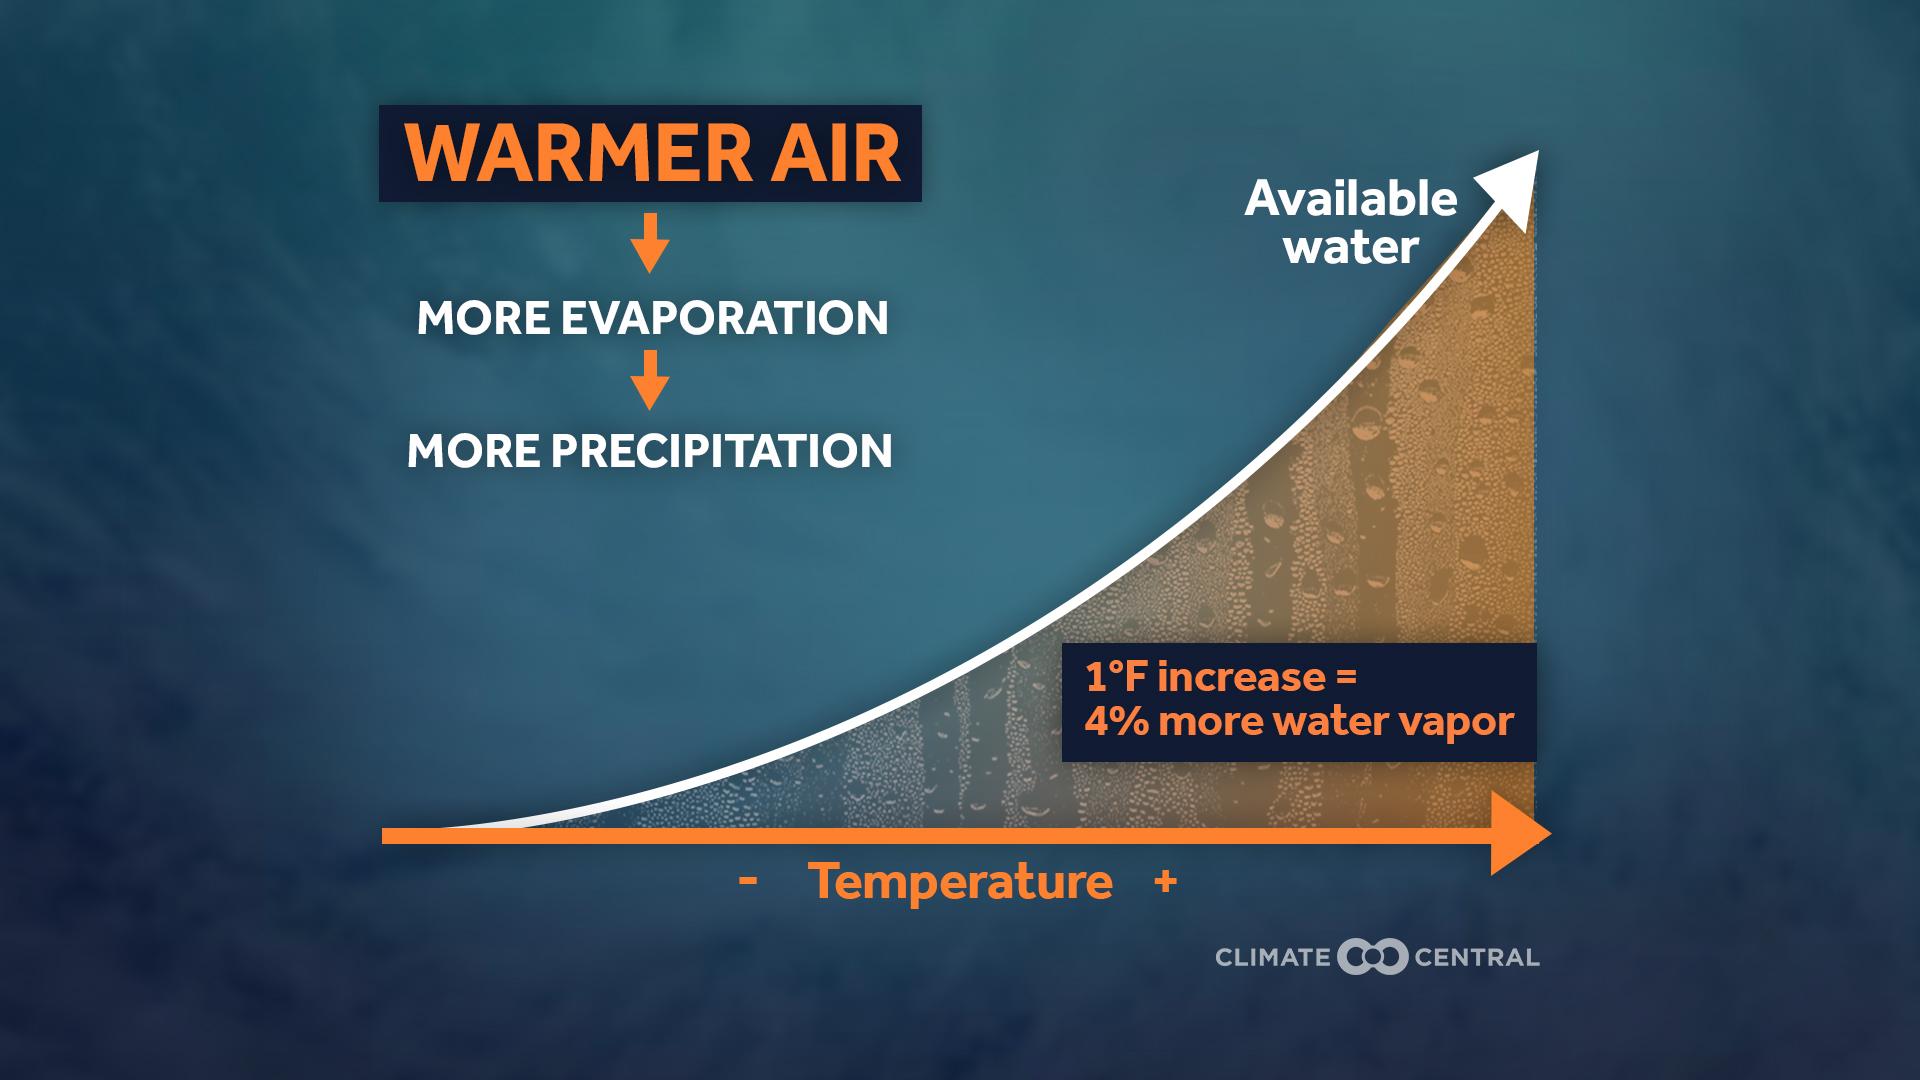 Warmer Air Means More Evaporation and Precipitation - 2020 Hurricane Season